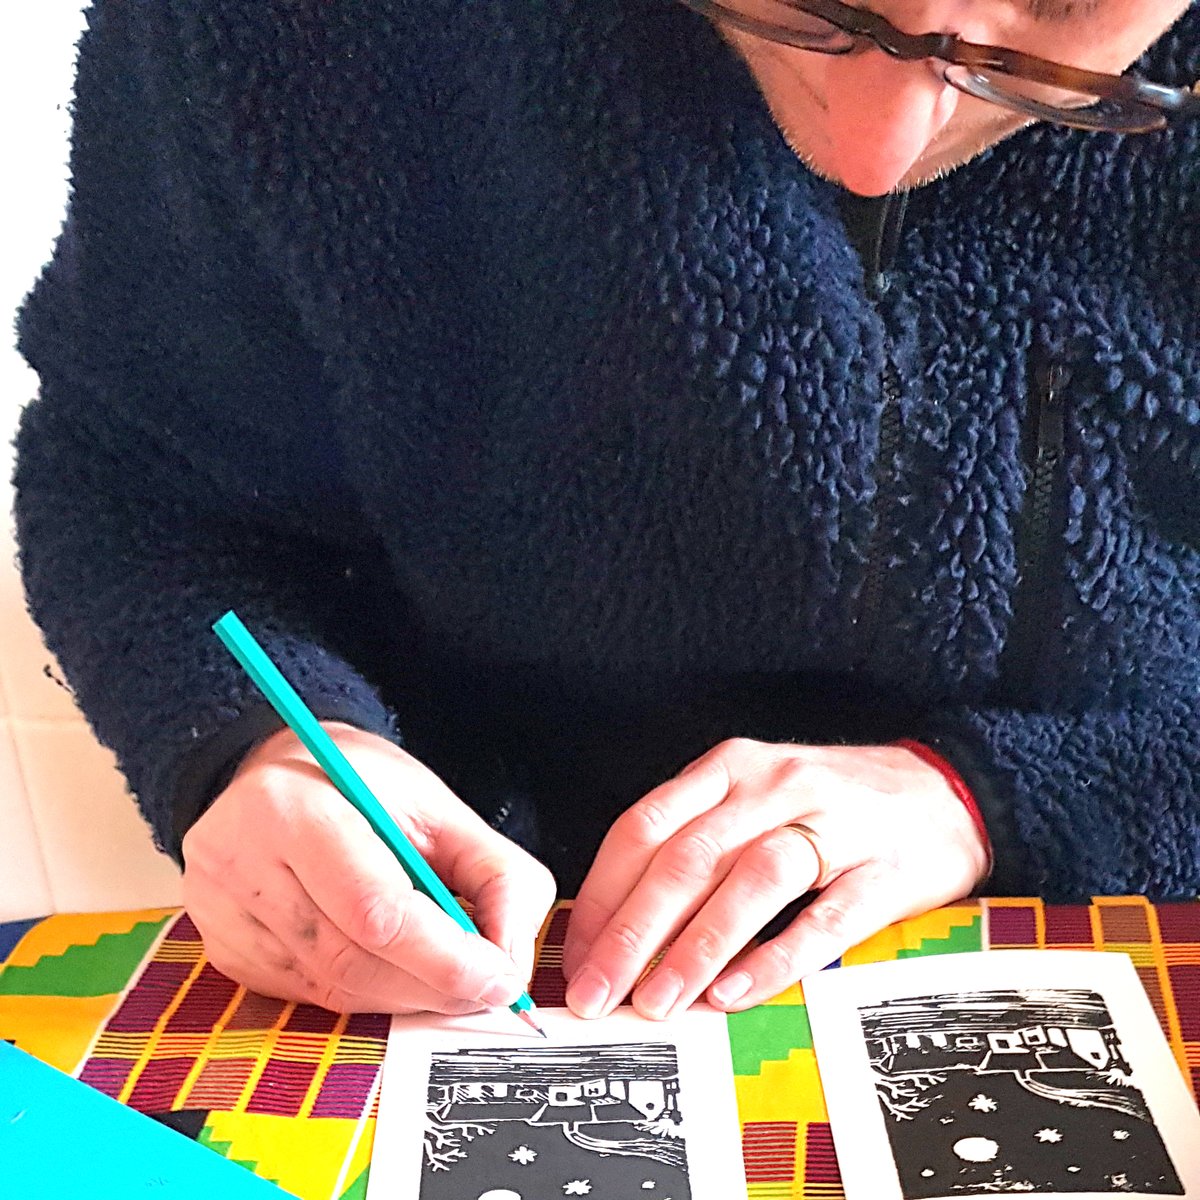 Trying to write very neatly when I'm numbering the final prints.
#slavonija #croatia #handmadeprints #printer #linoprint #linoleumblockprint #linoldruck #linoleografia #wallartdecor #artprints #wallart #walldecor #artwork #smallart #artwork #handmade #inked #giftidea